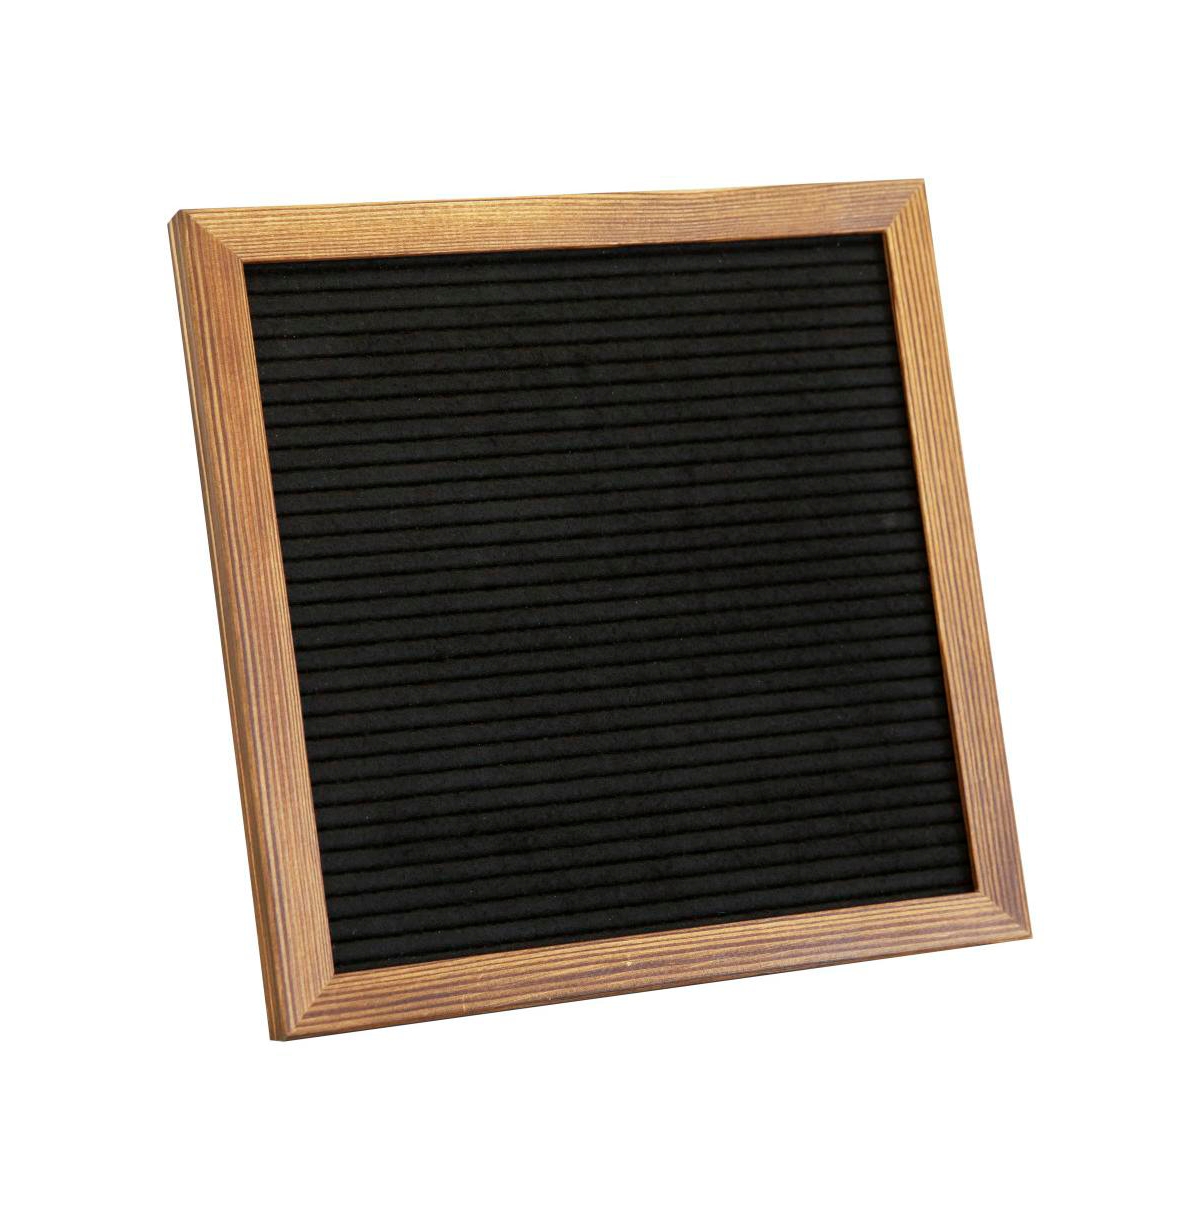 Bette 10" x 10" Wood and Felt Letter Board Set - Weathered wood frame/gray felt